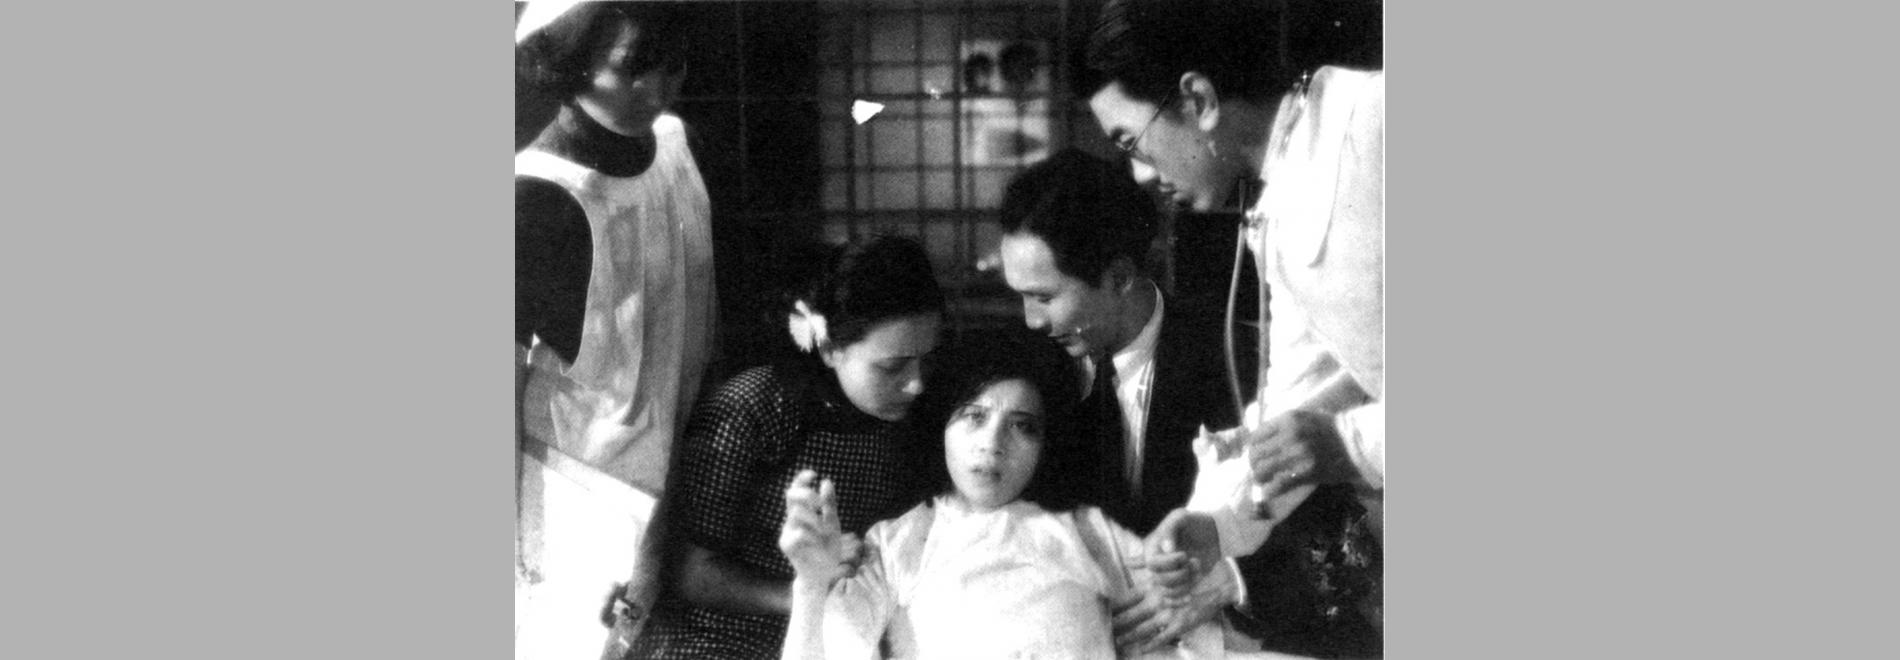 Xin nü xing / Noves dones (Cai Chusheng, 1934)